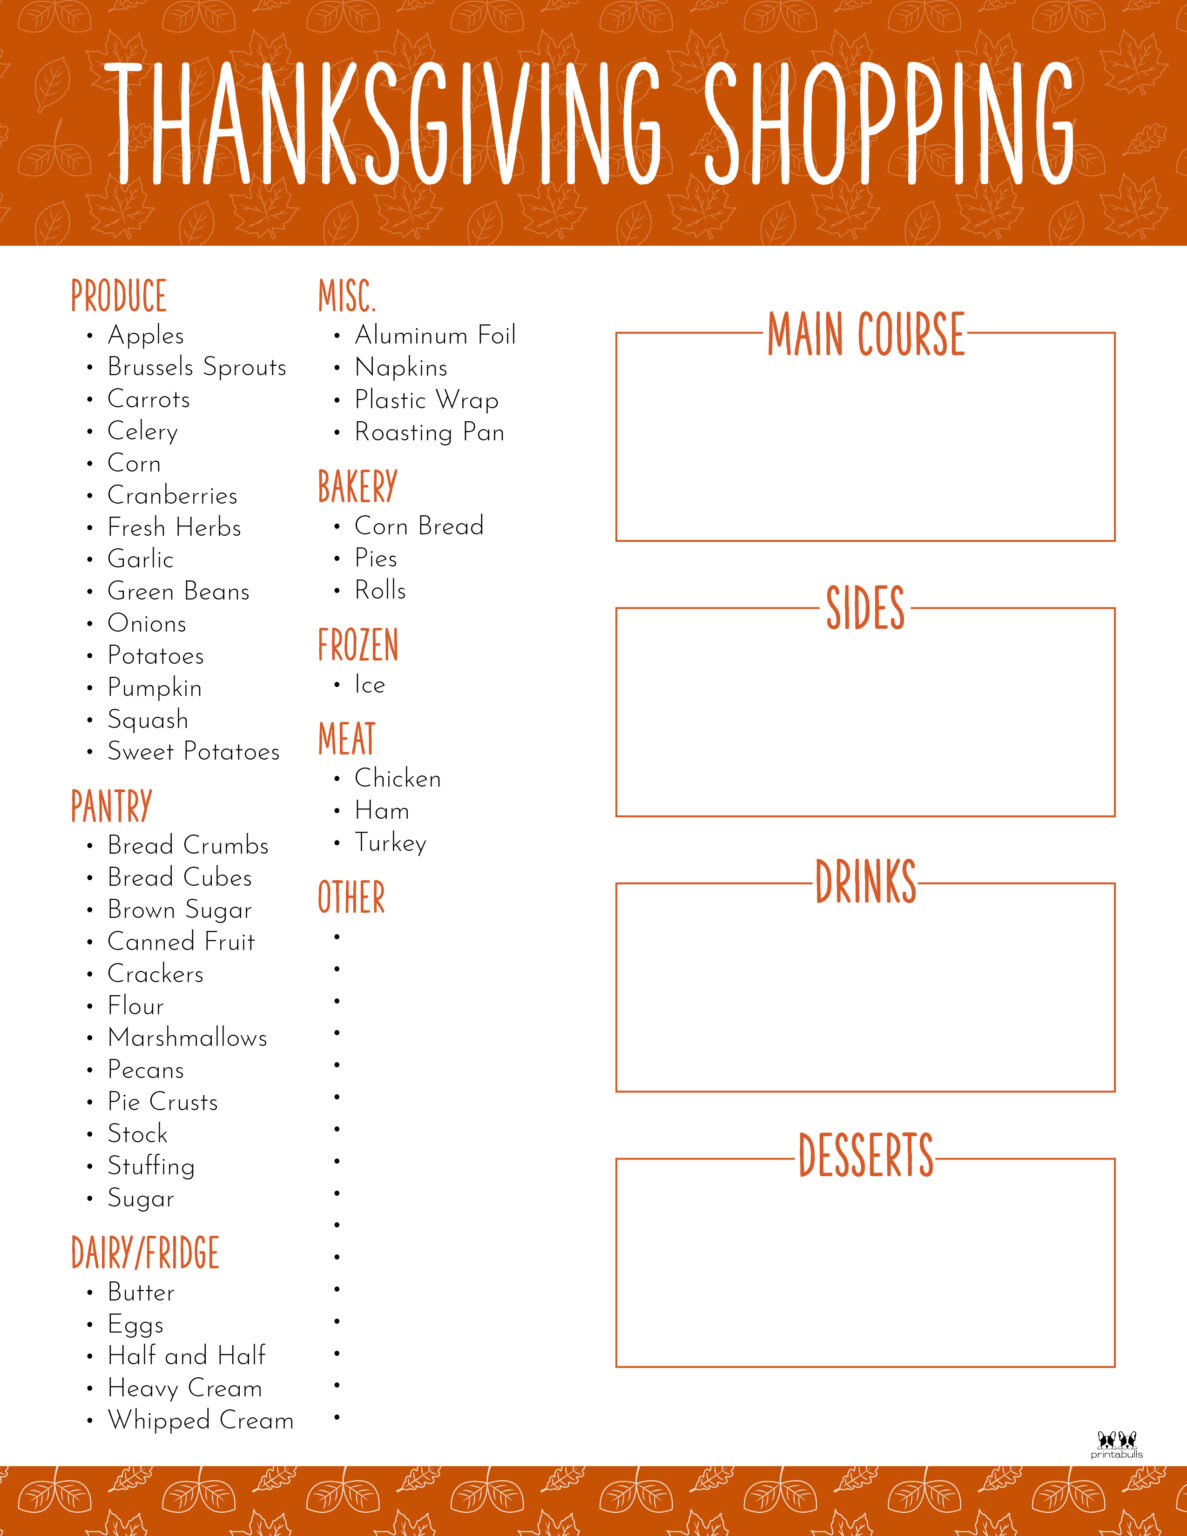 Thanksgiving Shopping Lists & Checklists - 30 FREE Printables | Printabulls